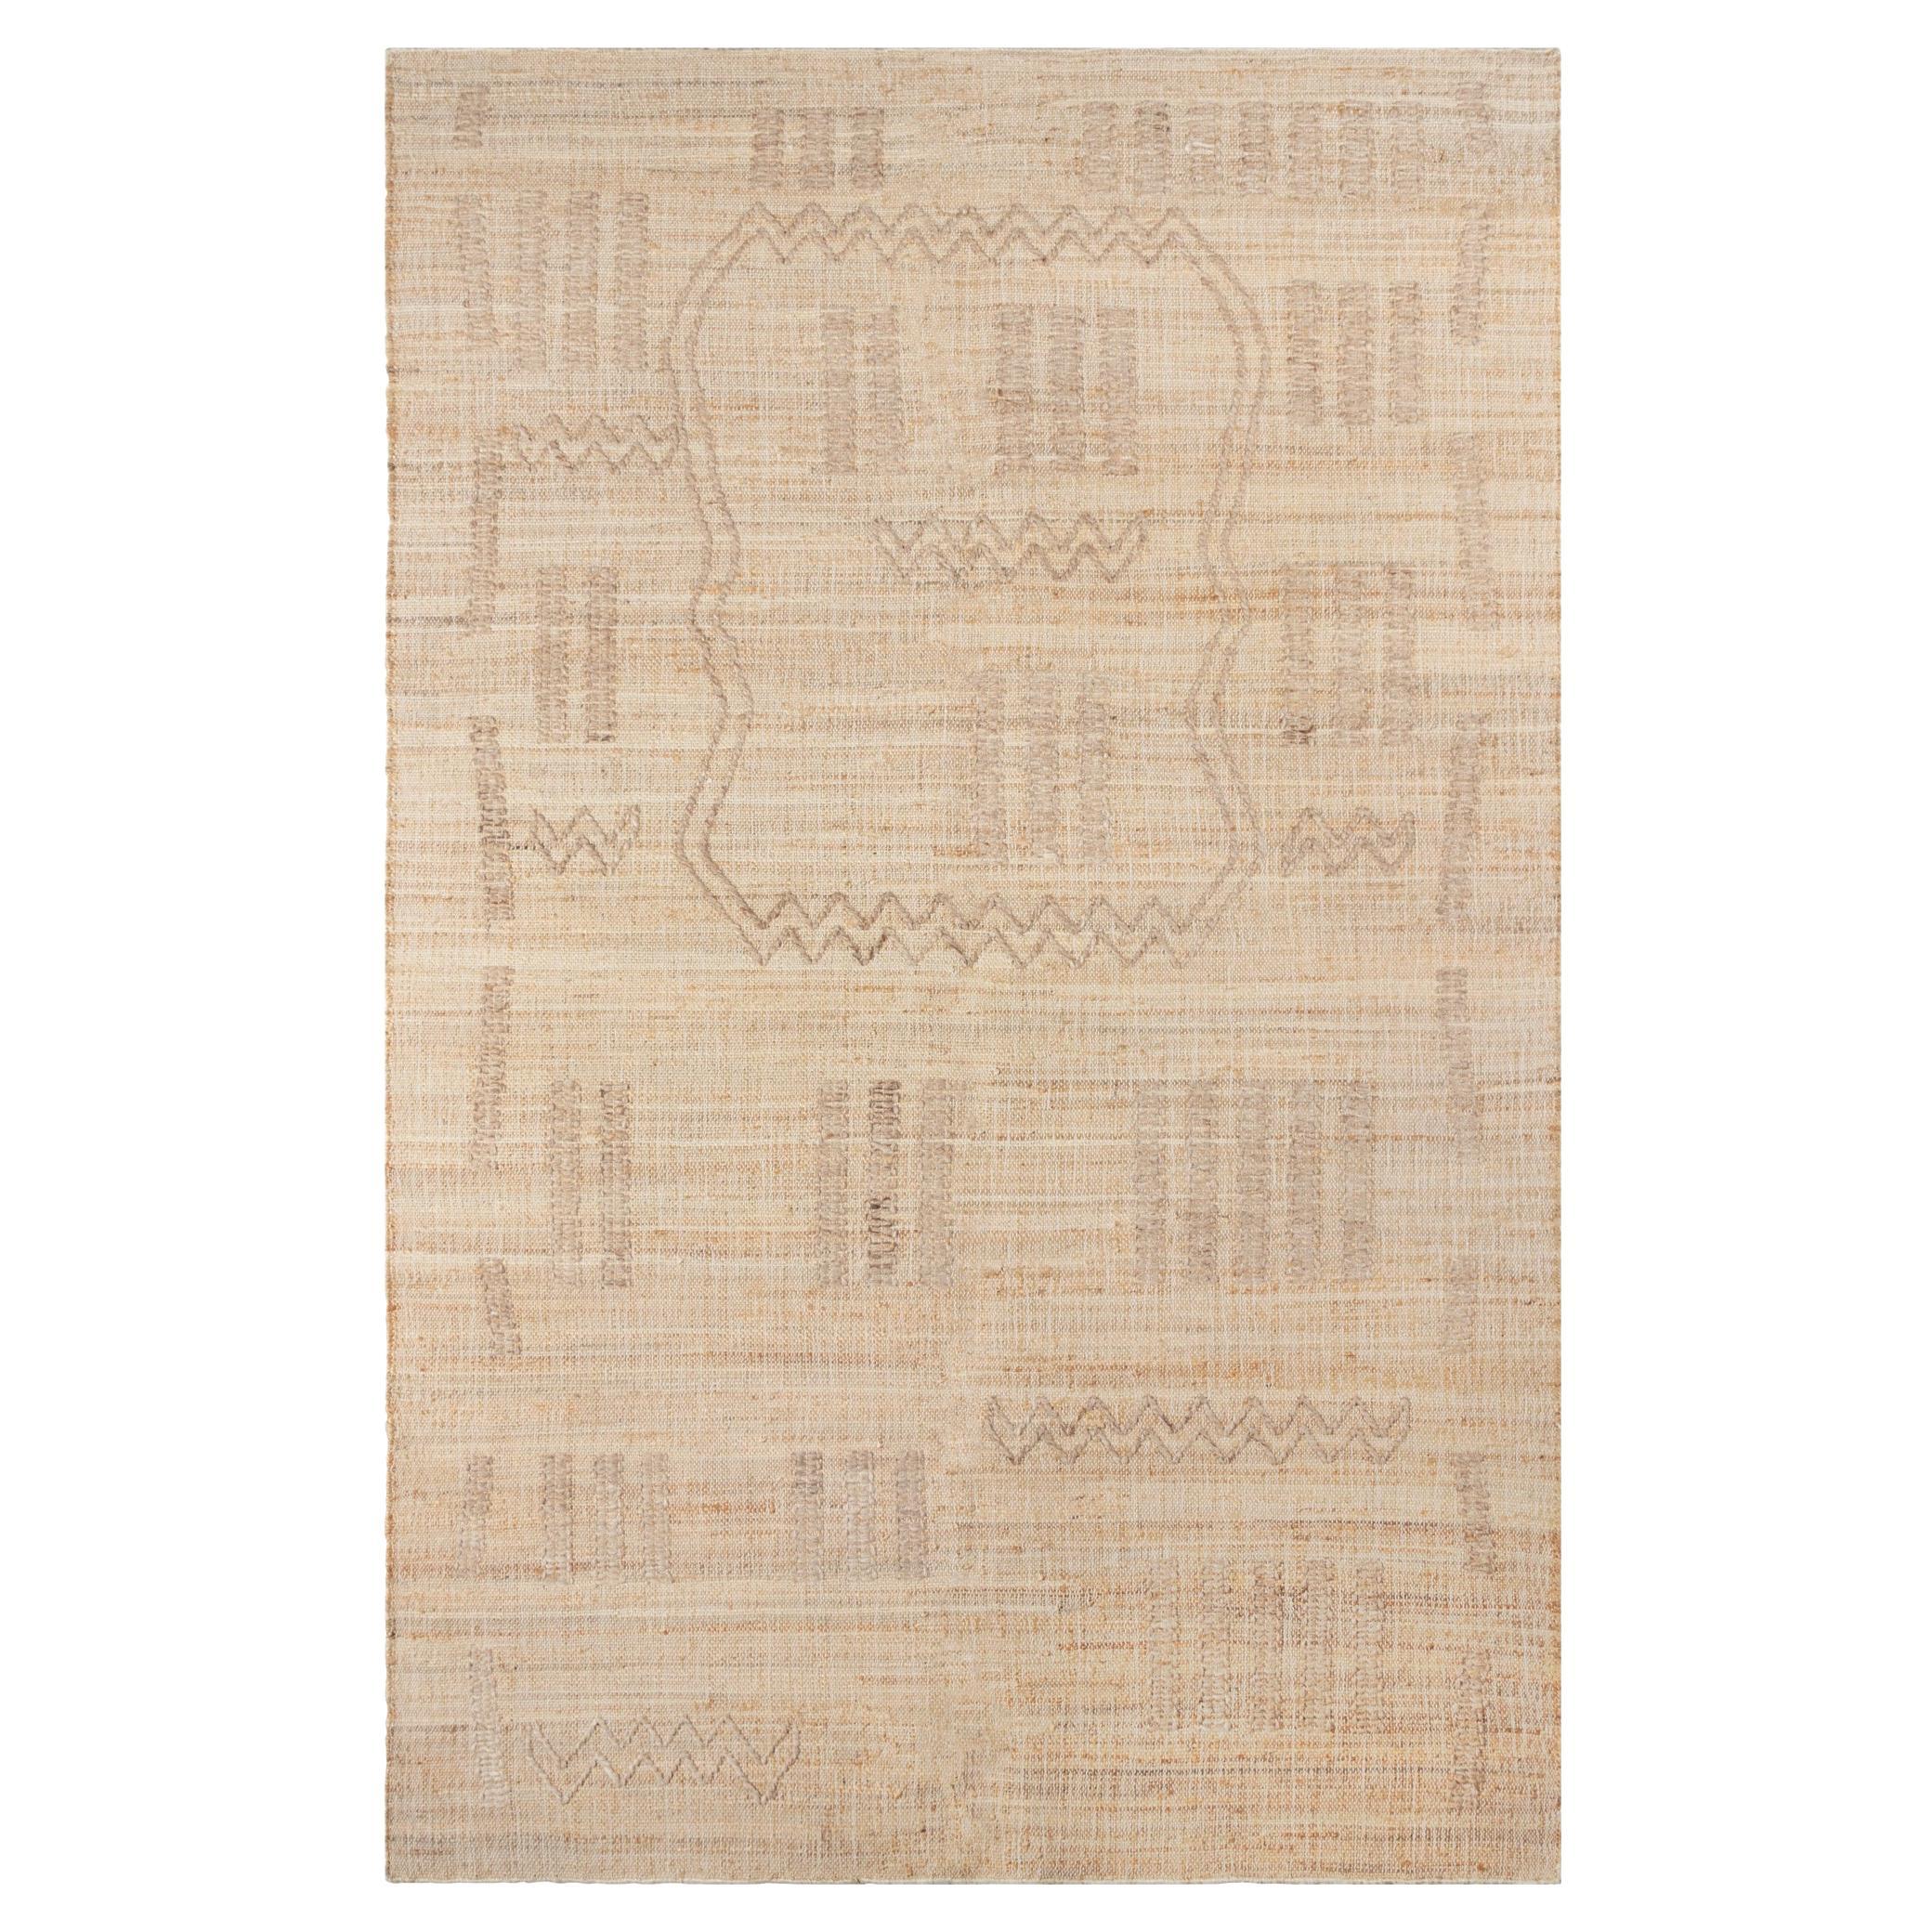 “Argan Sabule” African Mud cloth-Inspired Rug by Christiane Lemieux For Sale